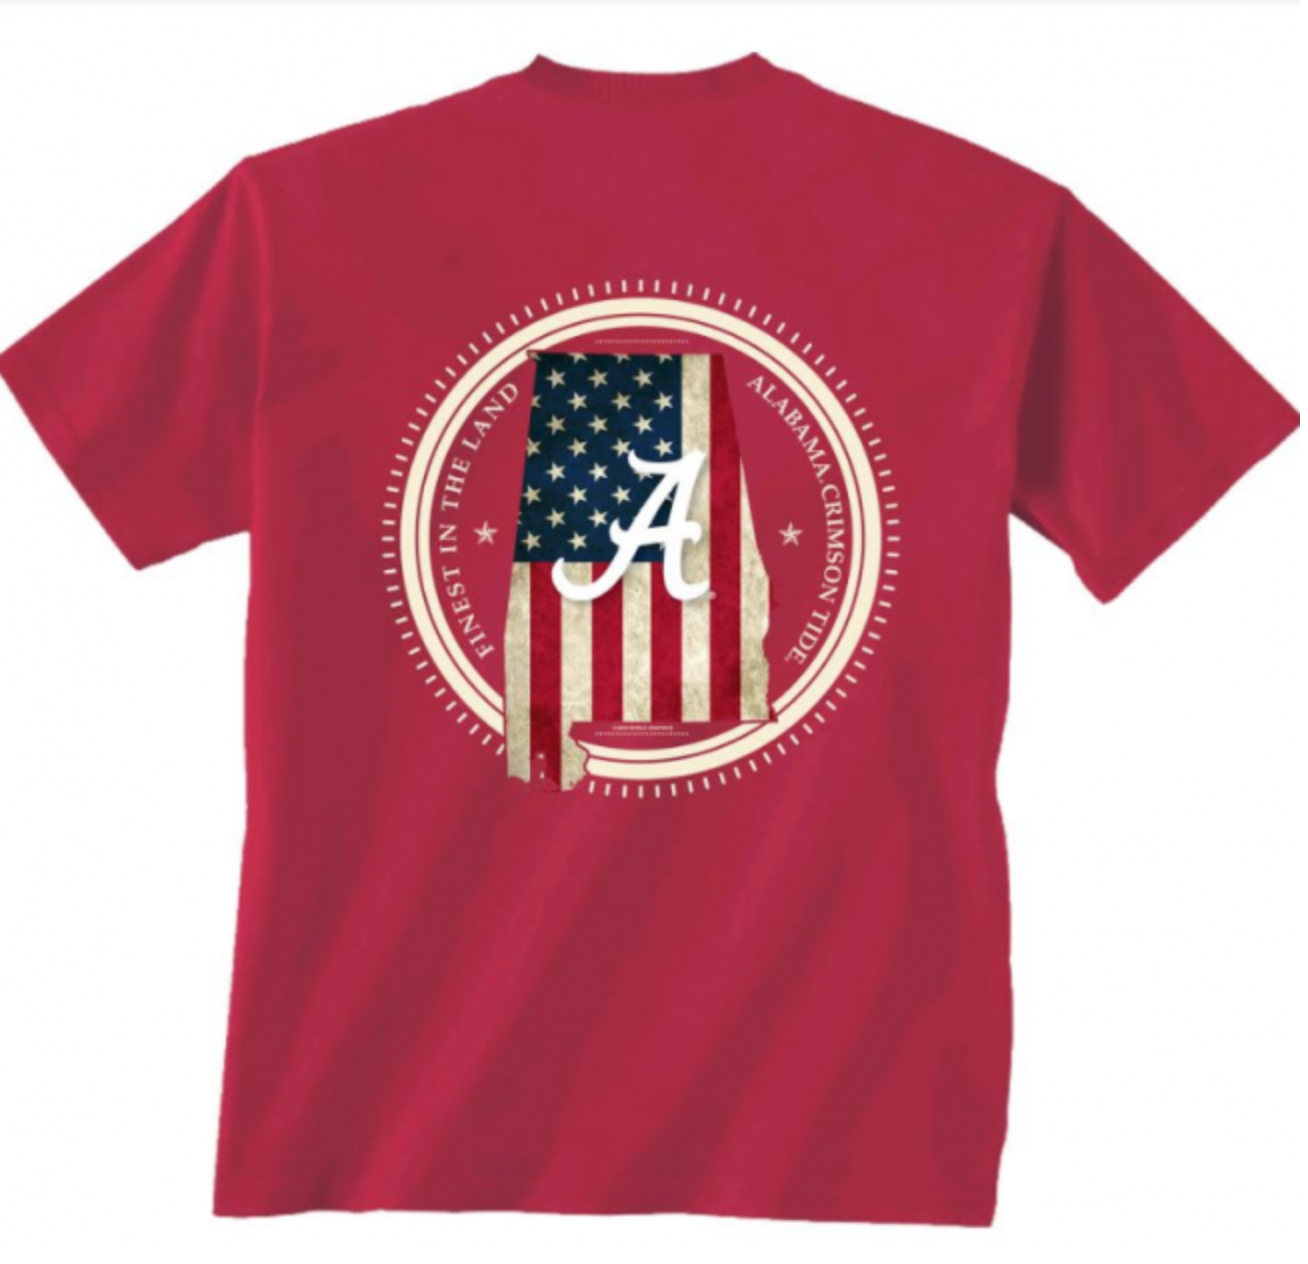 Alabama "USA" T-Shirt